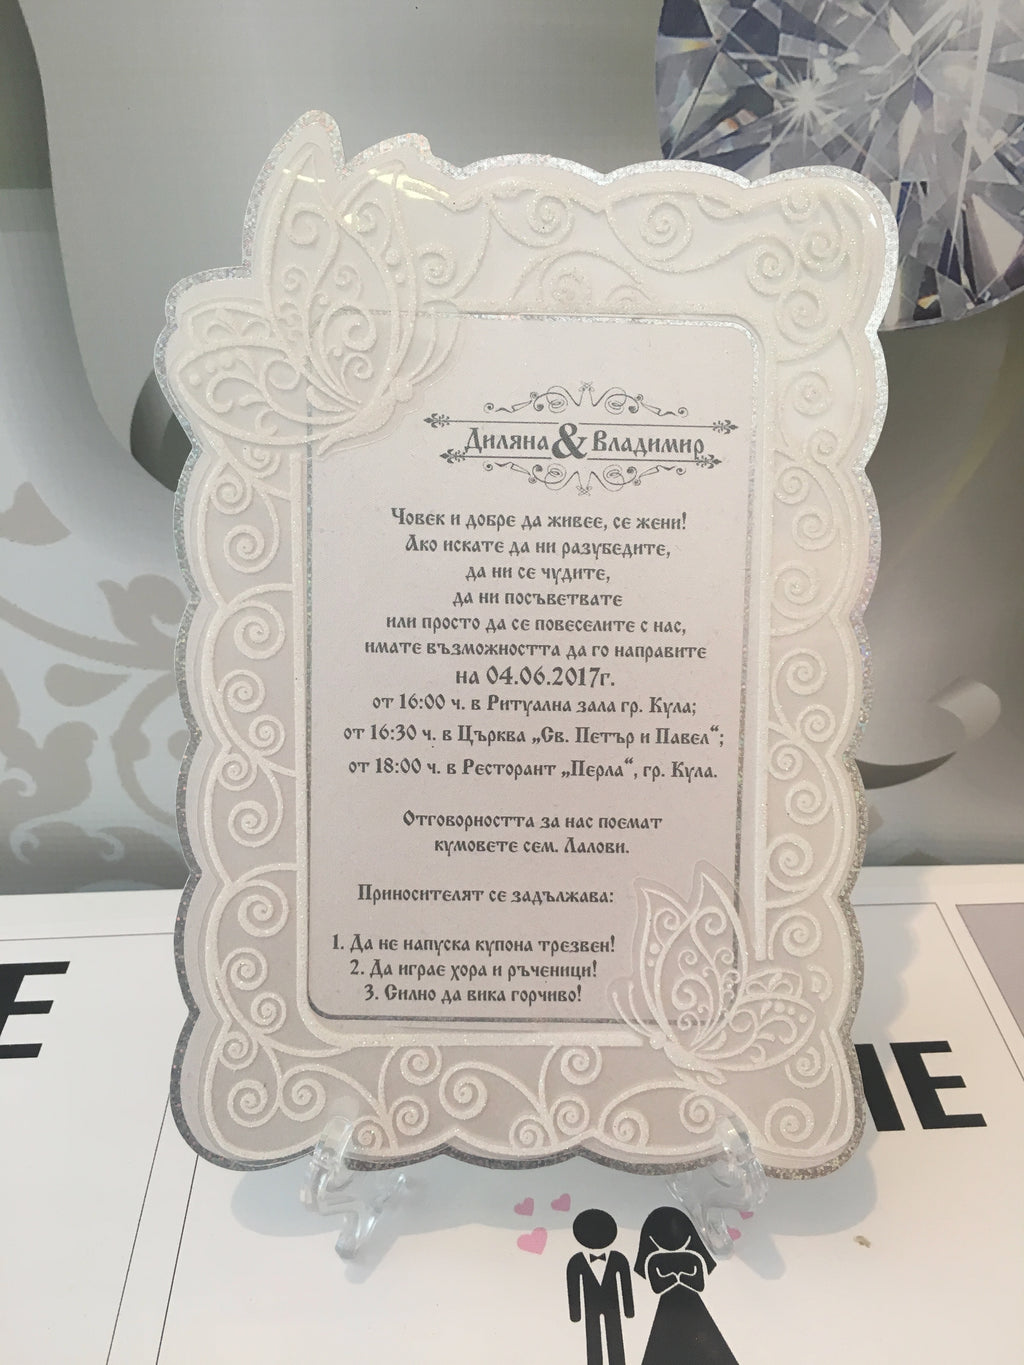 Acrylic Invitations - weddingcardsuk.com